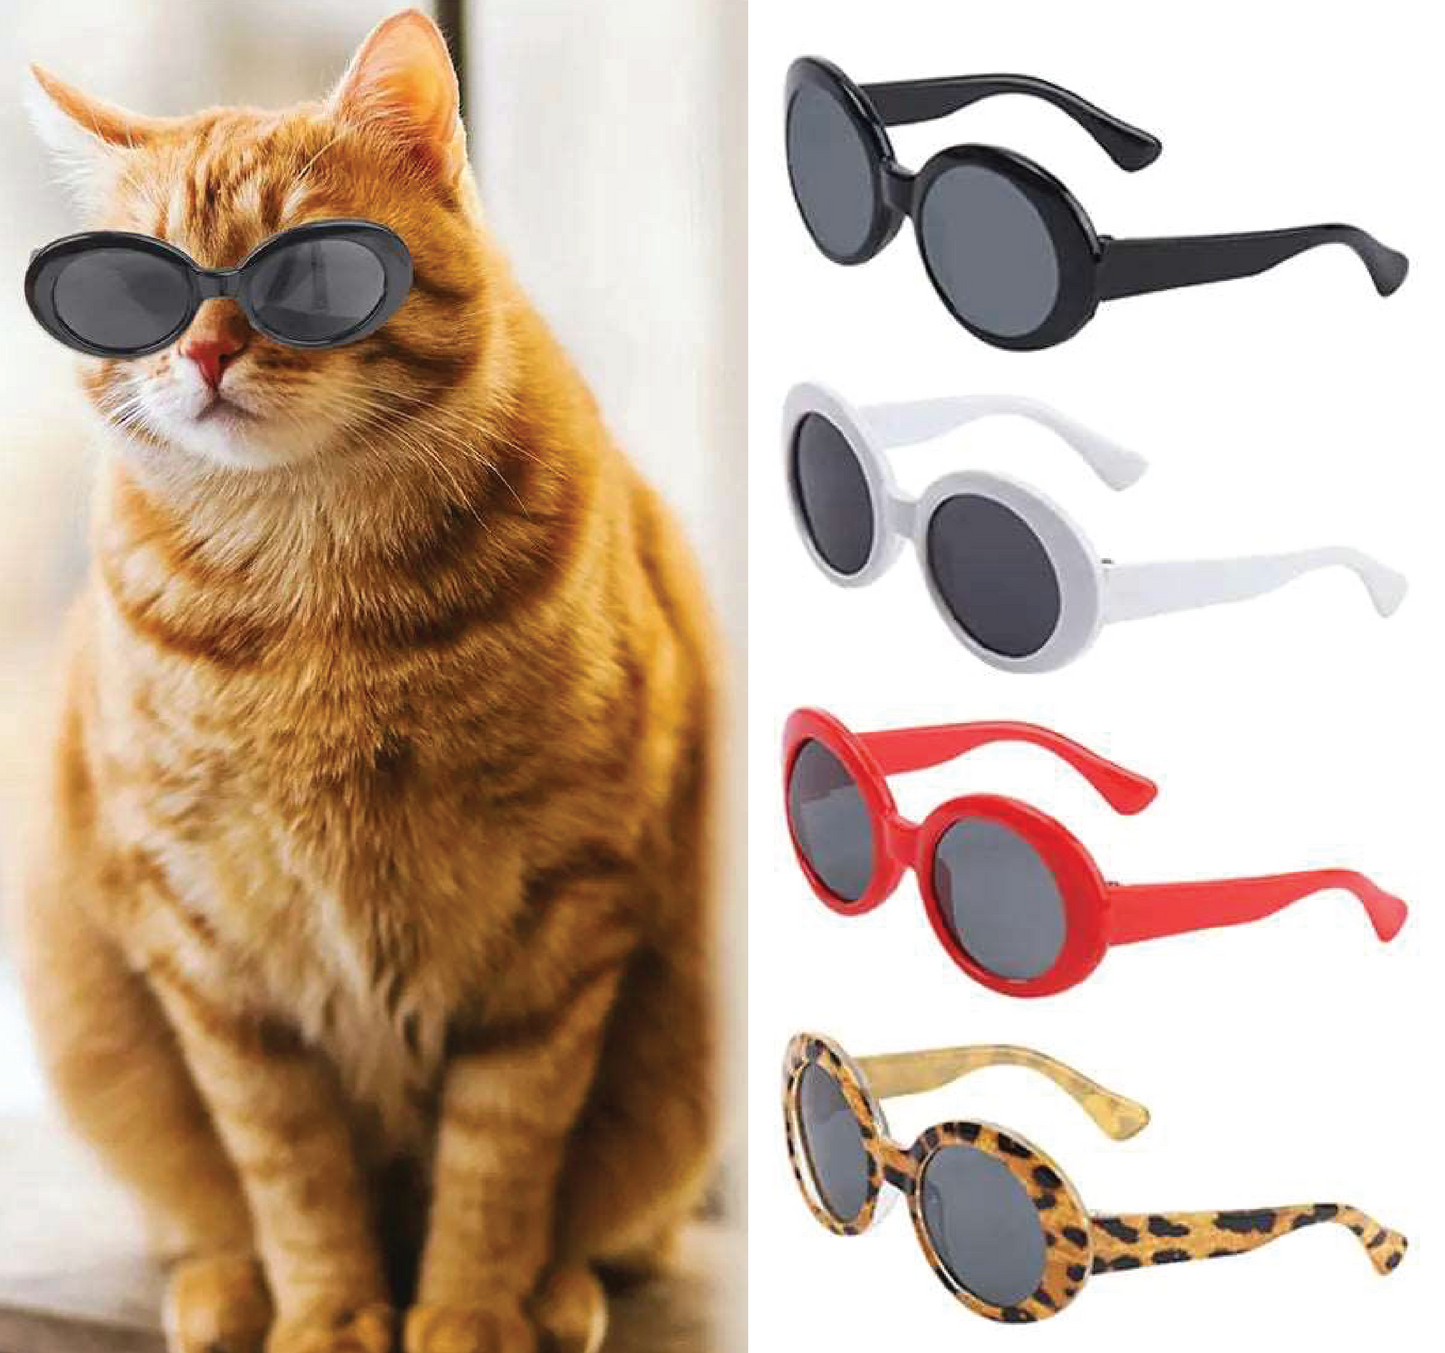 Cat wearing round pet sunglasses